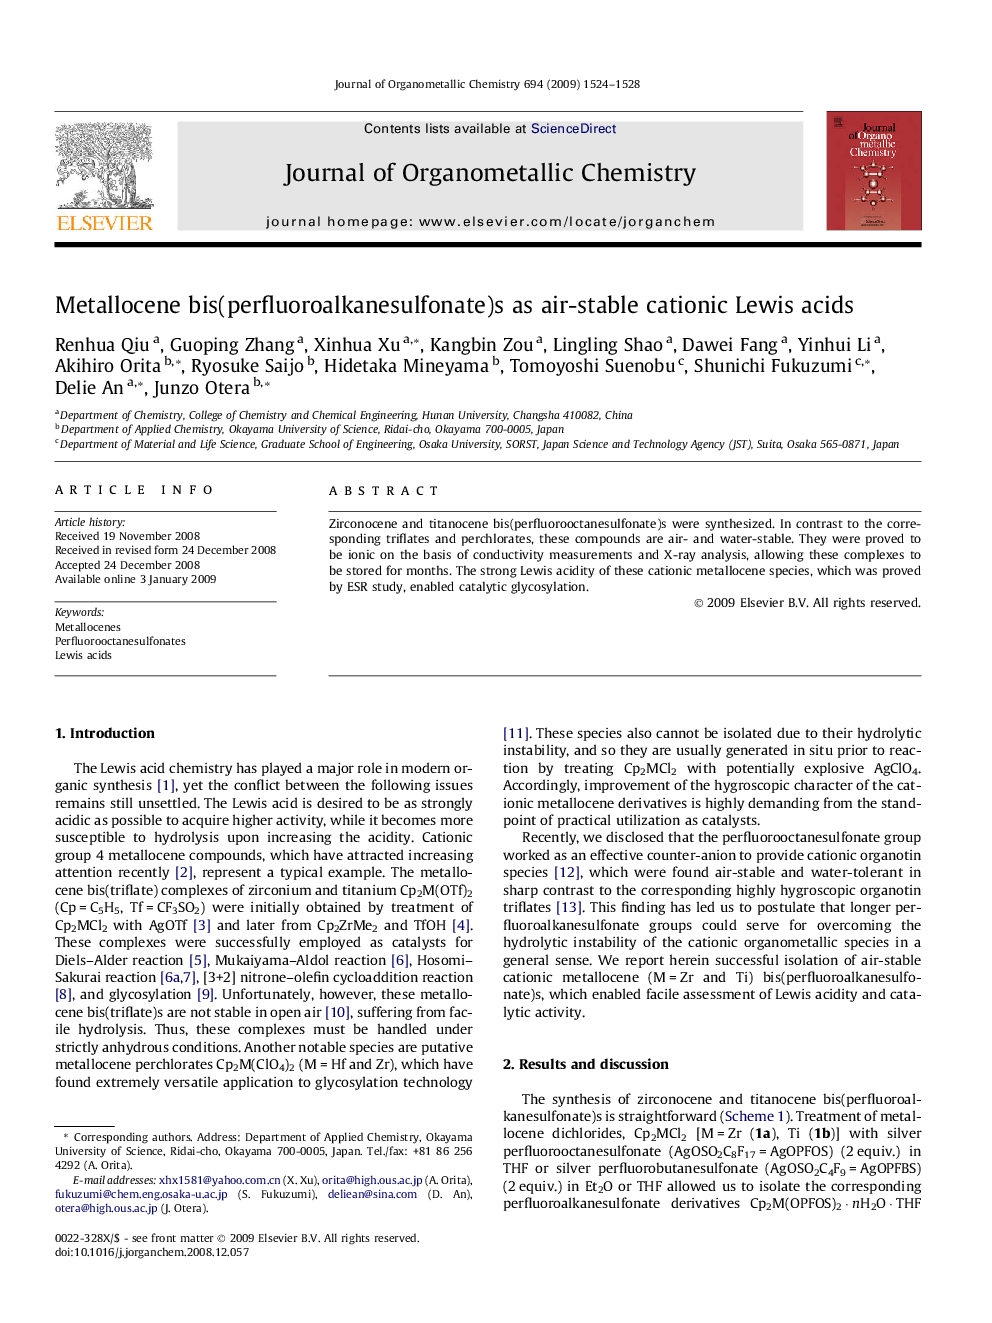 Metallocene bis(perfluoroalkanesulfonate)s as air-stable cationic Lewis acids